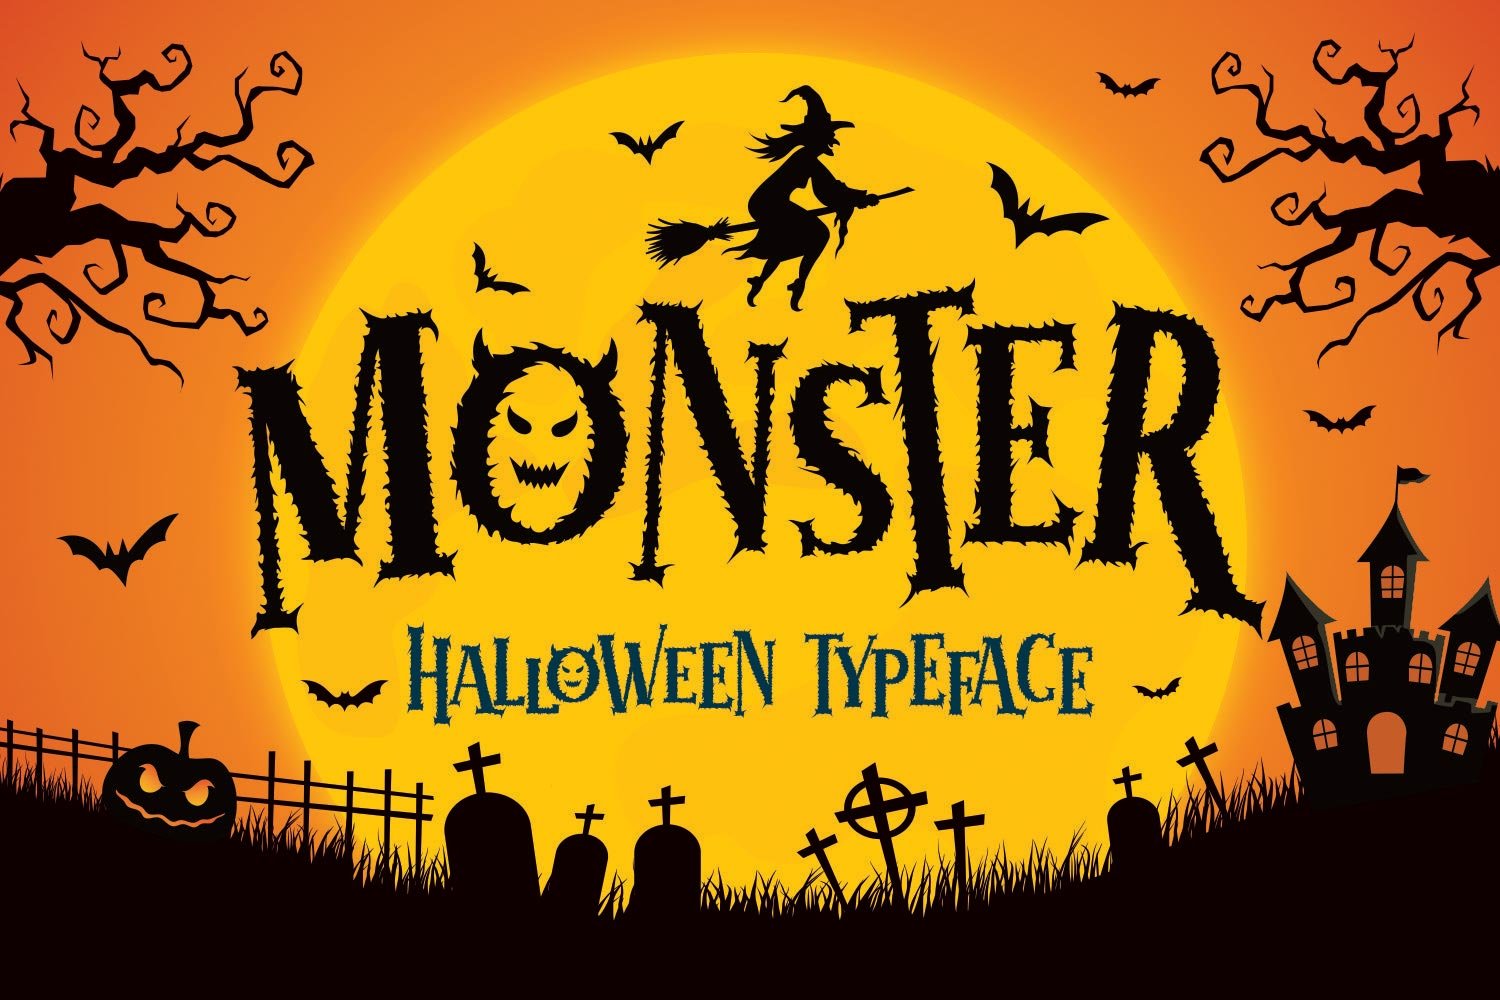 Monster Halloween cover image.